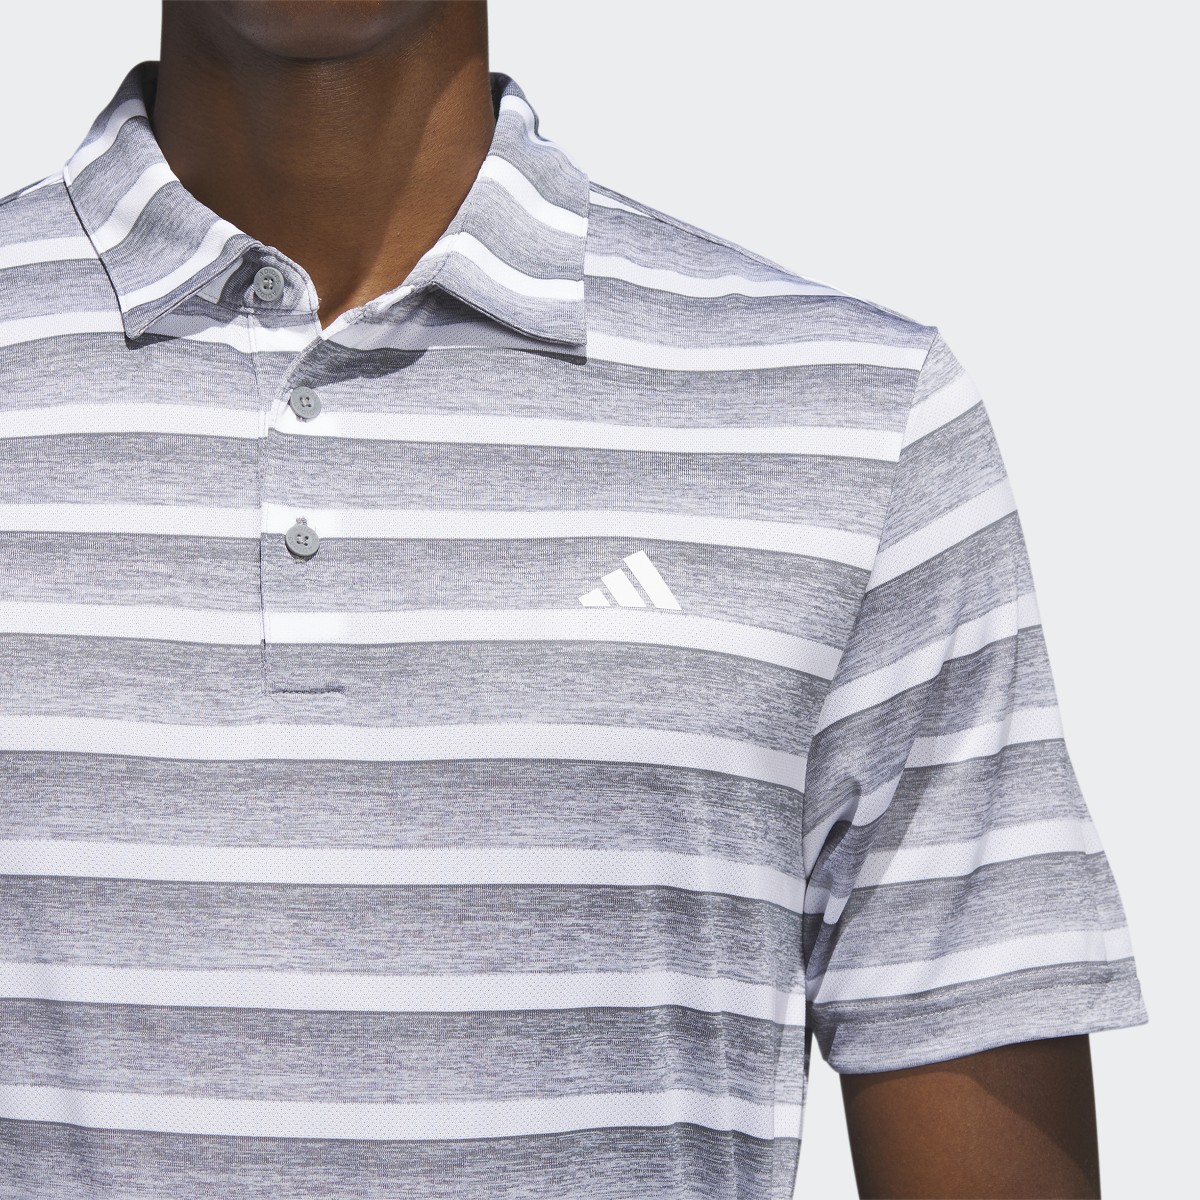 Adidas Two-Color Striped Golf Polo Shirt. 6